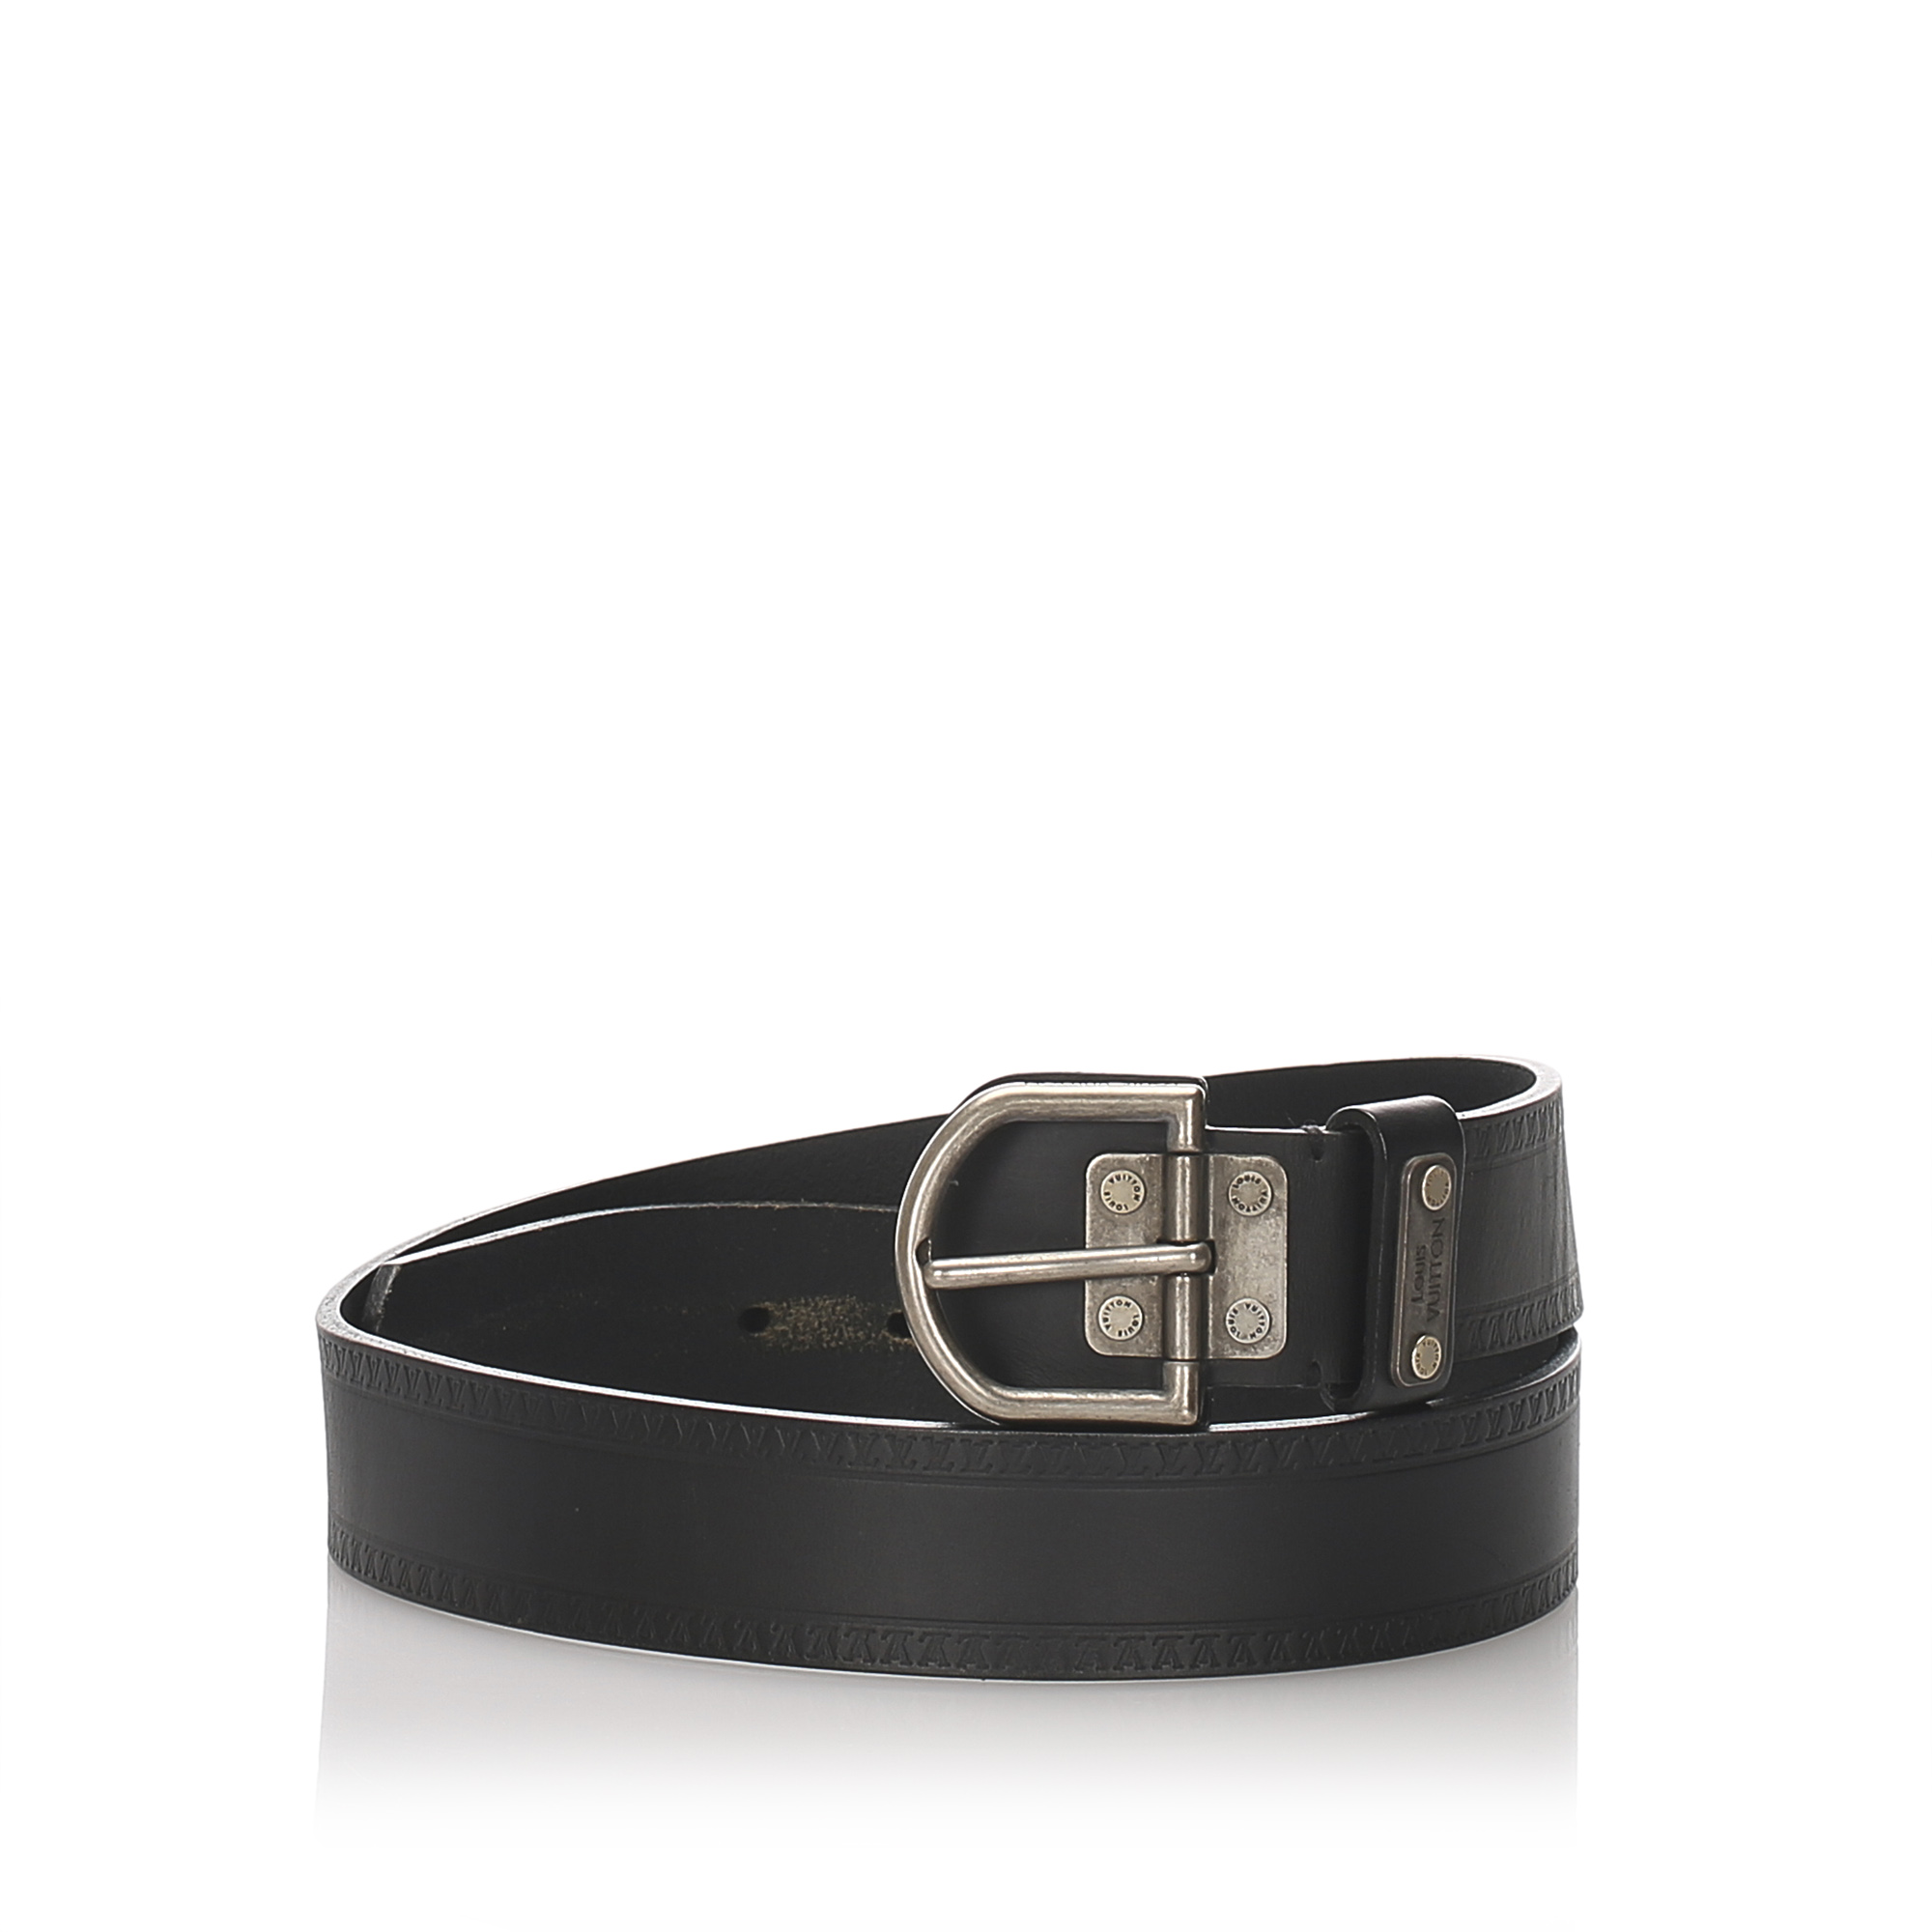 Pre-Loved Louis Vuitton Black Calf Leather Belt France | eBay